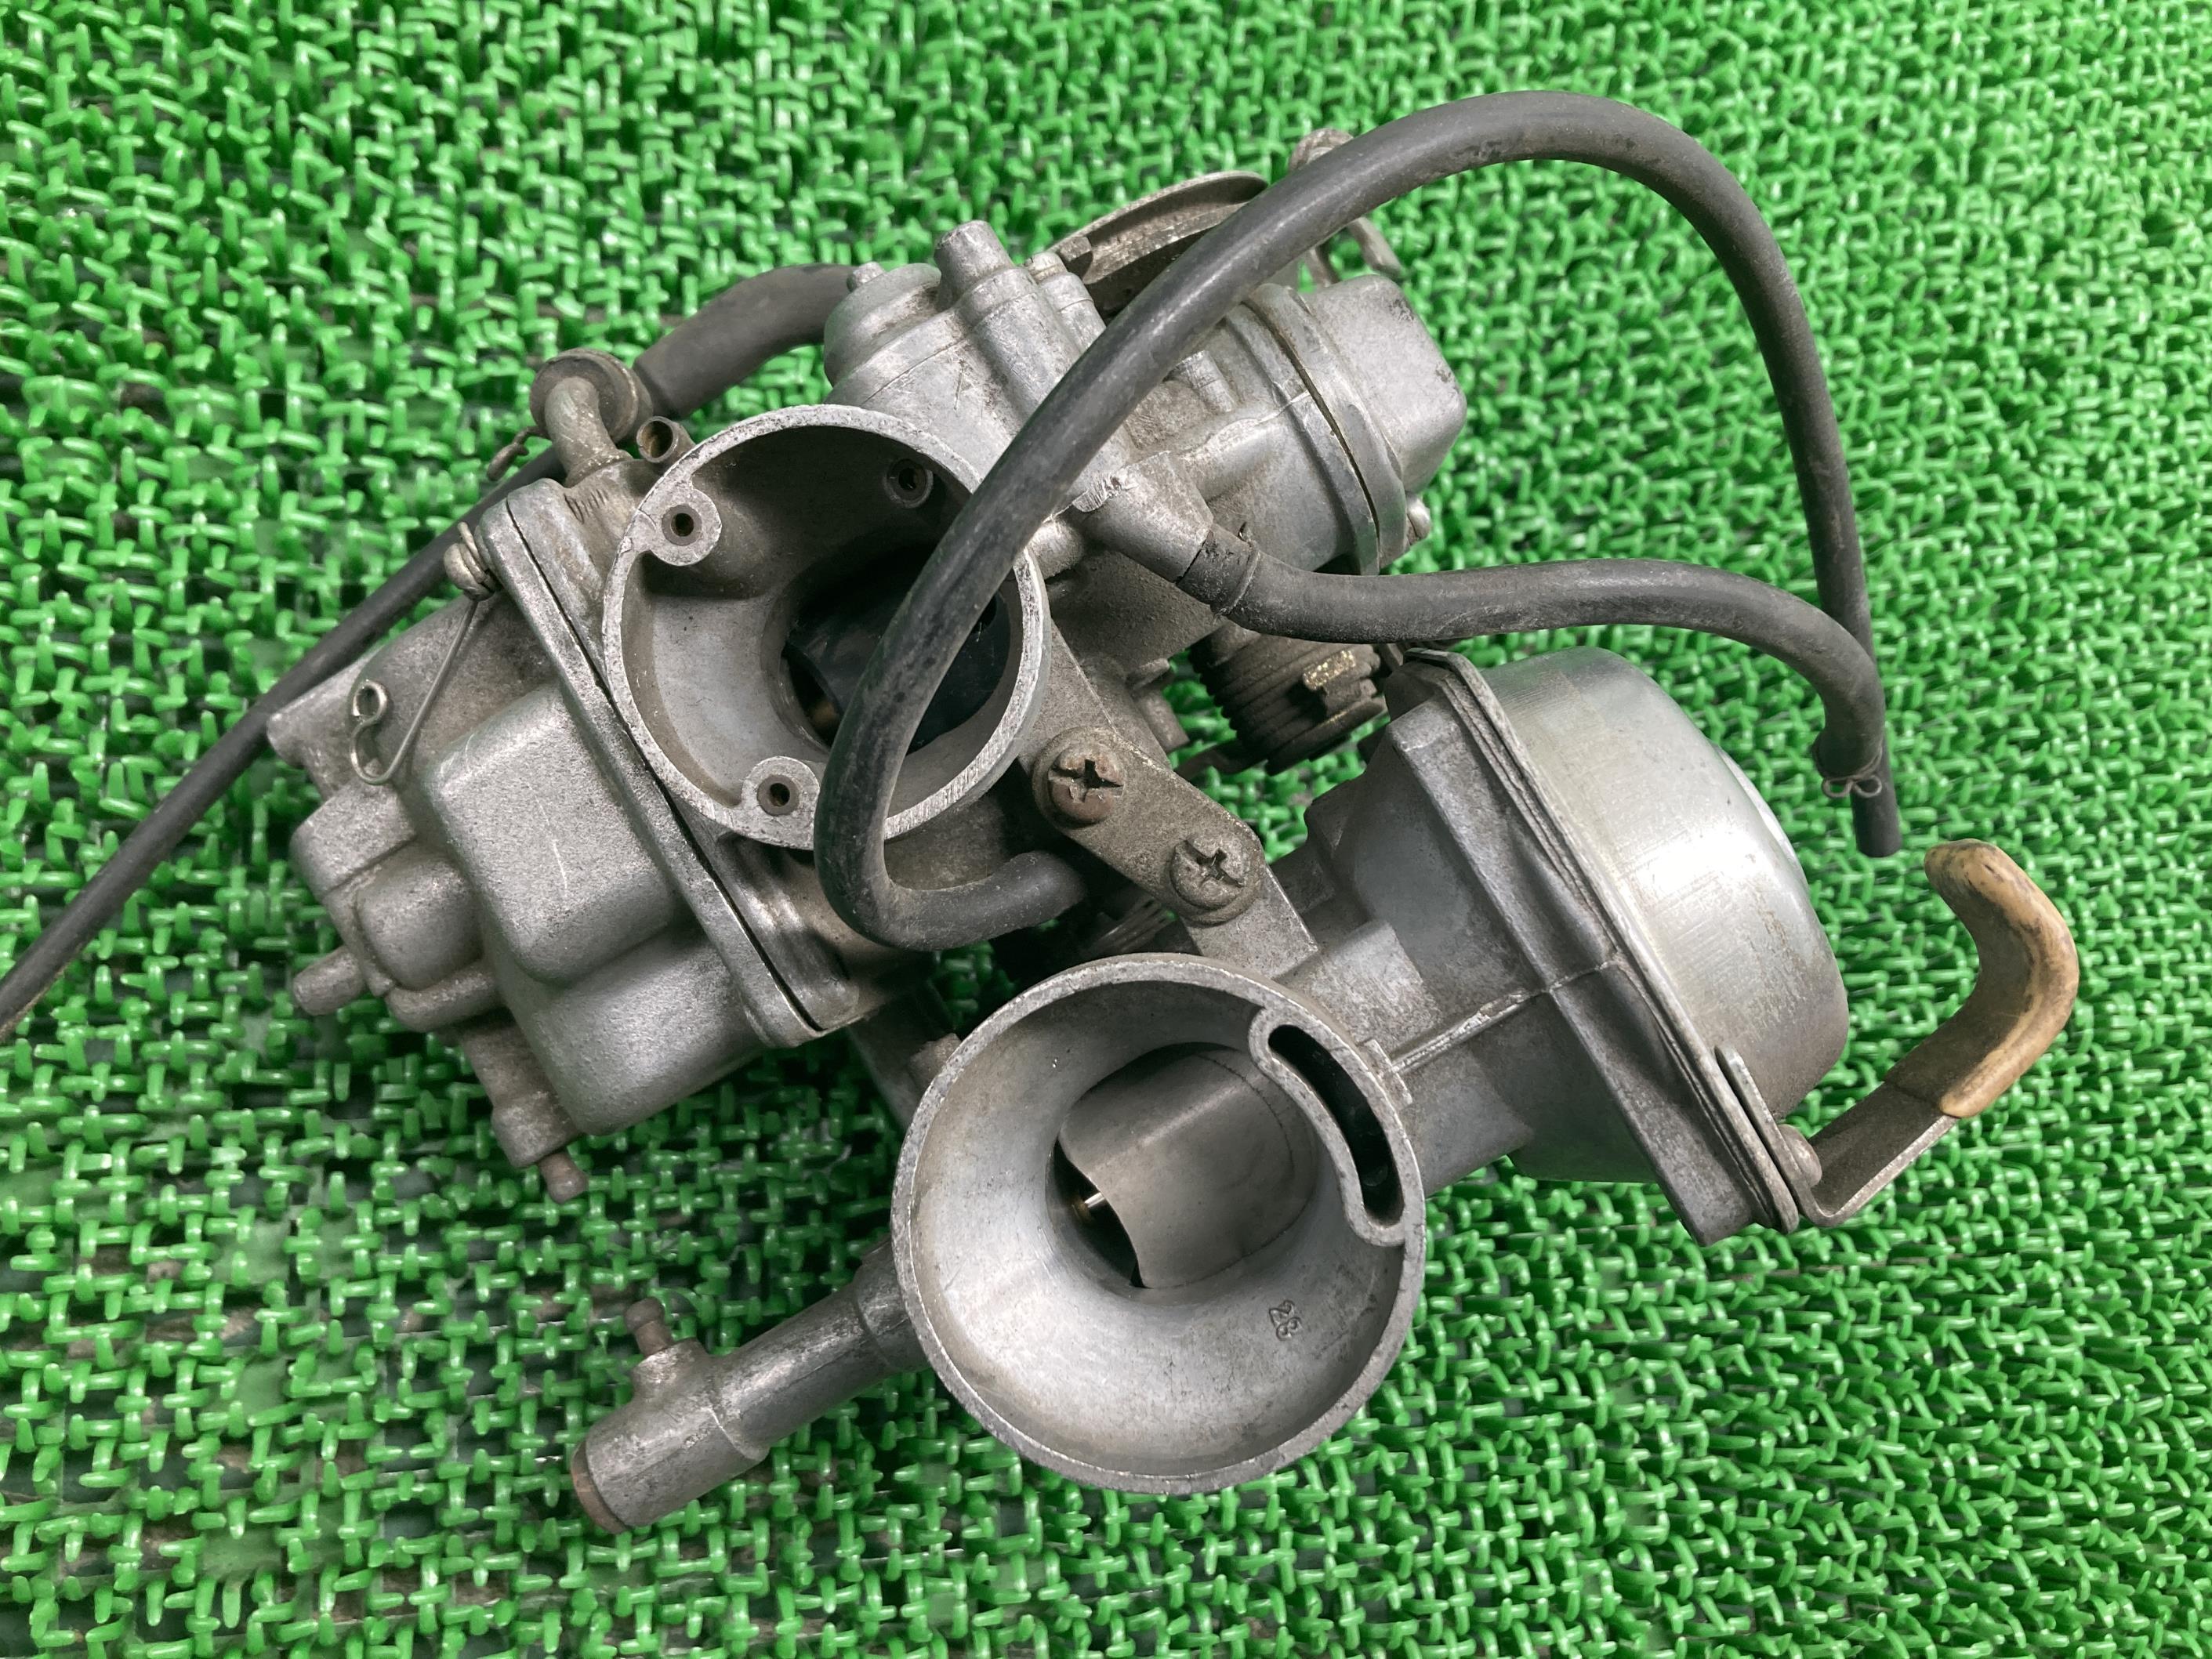 SRX400 carburetor Yamaha original used bike parts 1JL SRX-4 YDSL restoration material . no cracking chipping shortage of stock vehicle inspection "shaken" Genuine